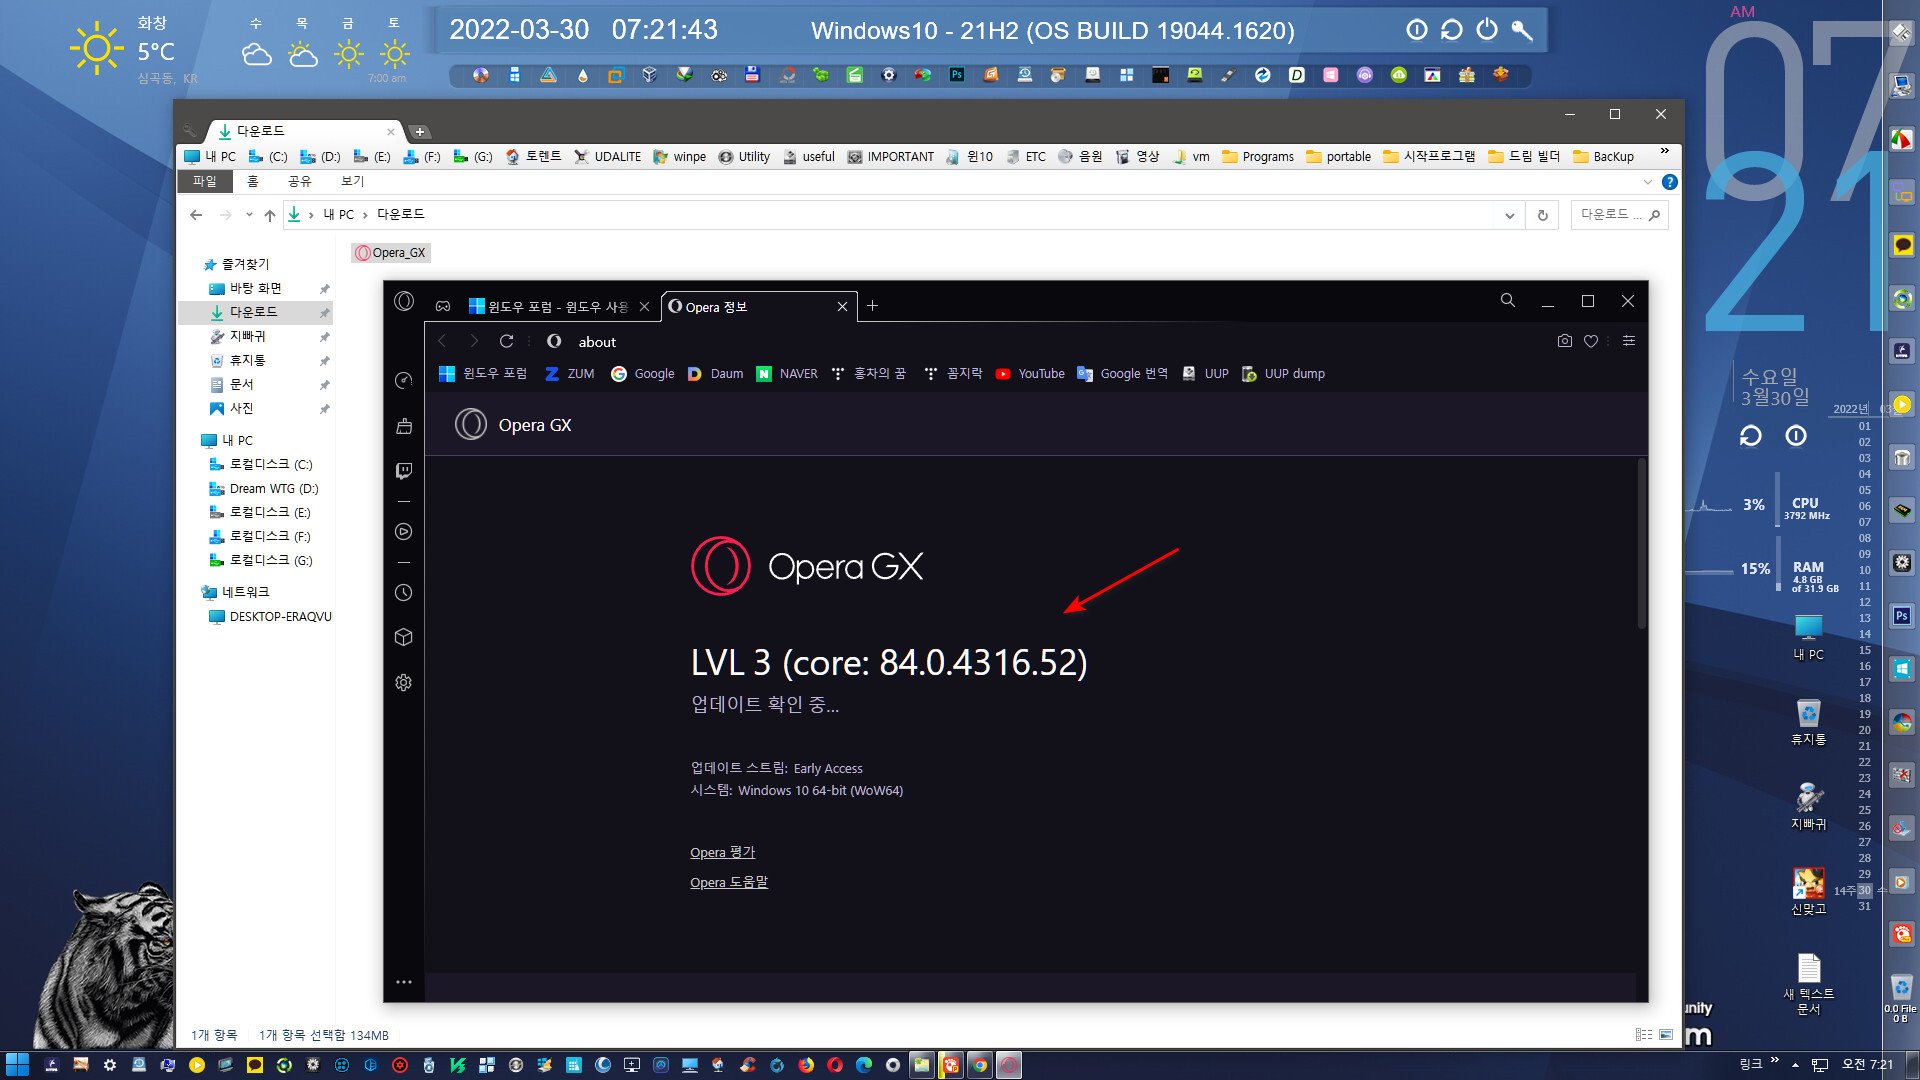 Opera GX 101.0.4843.55 instal the last version for ios